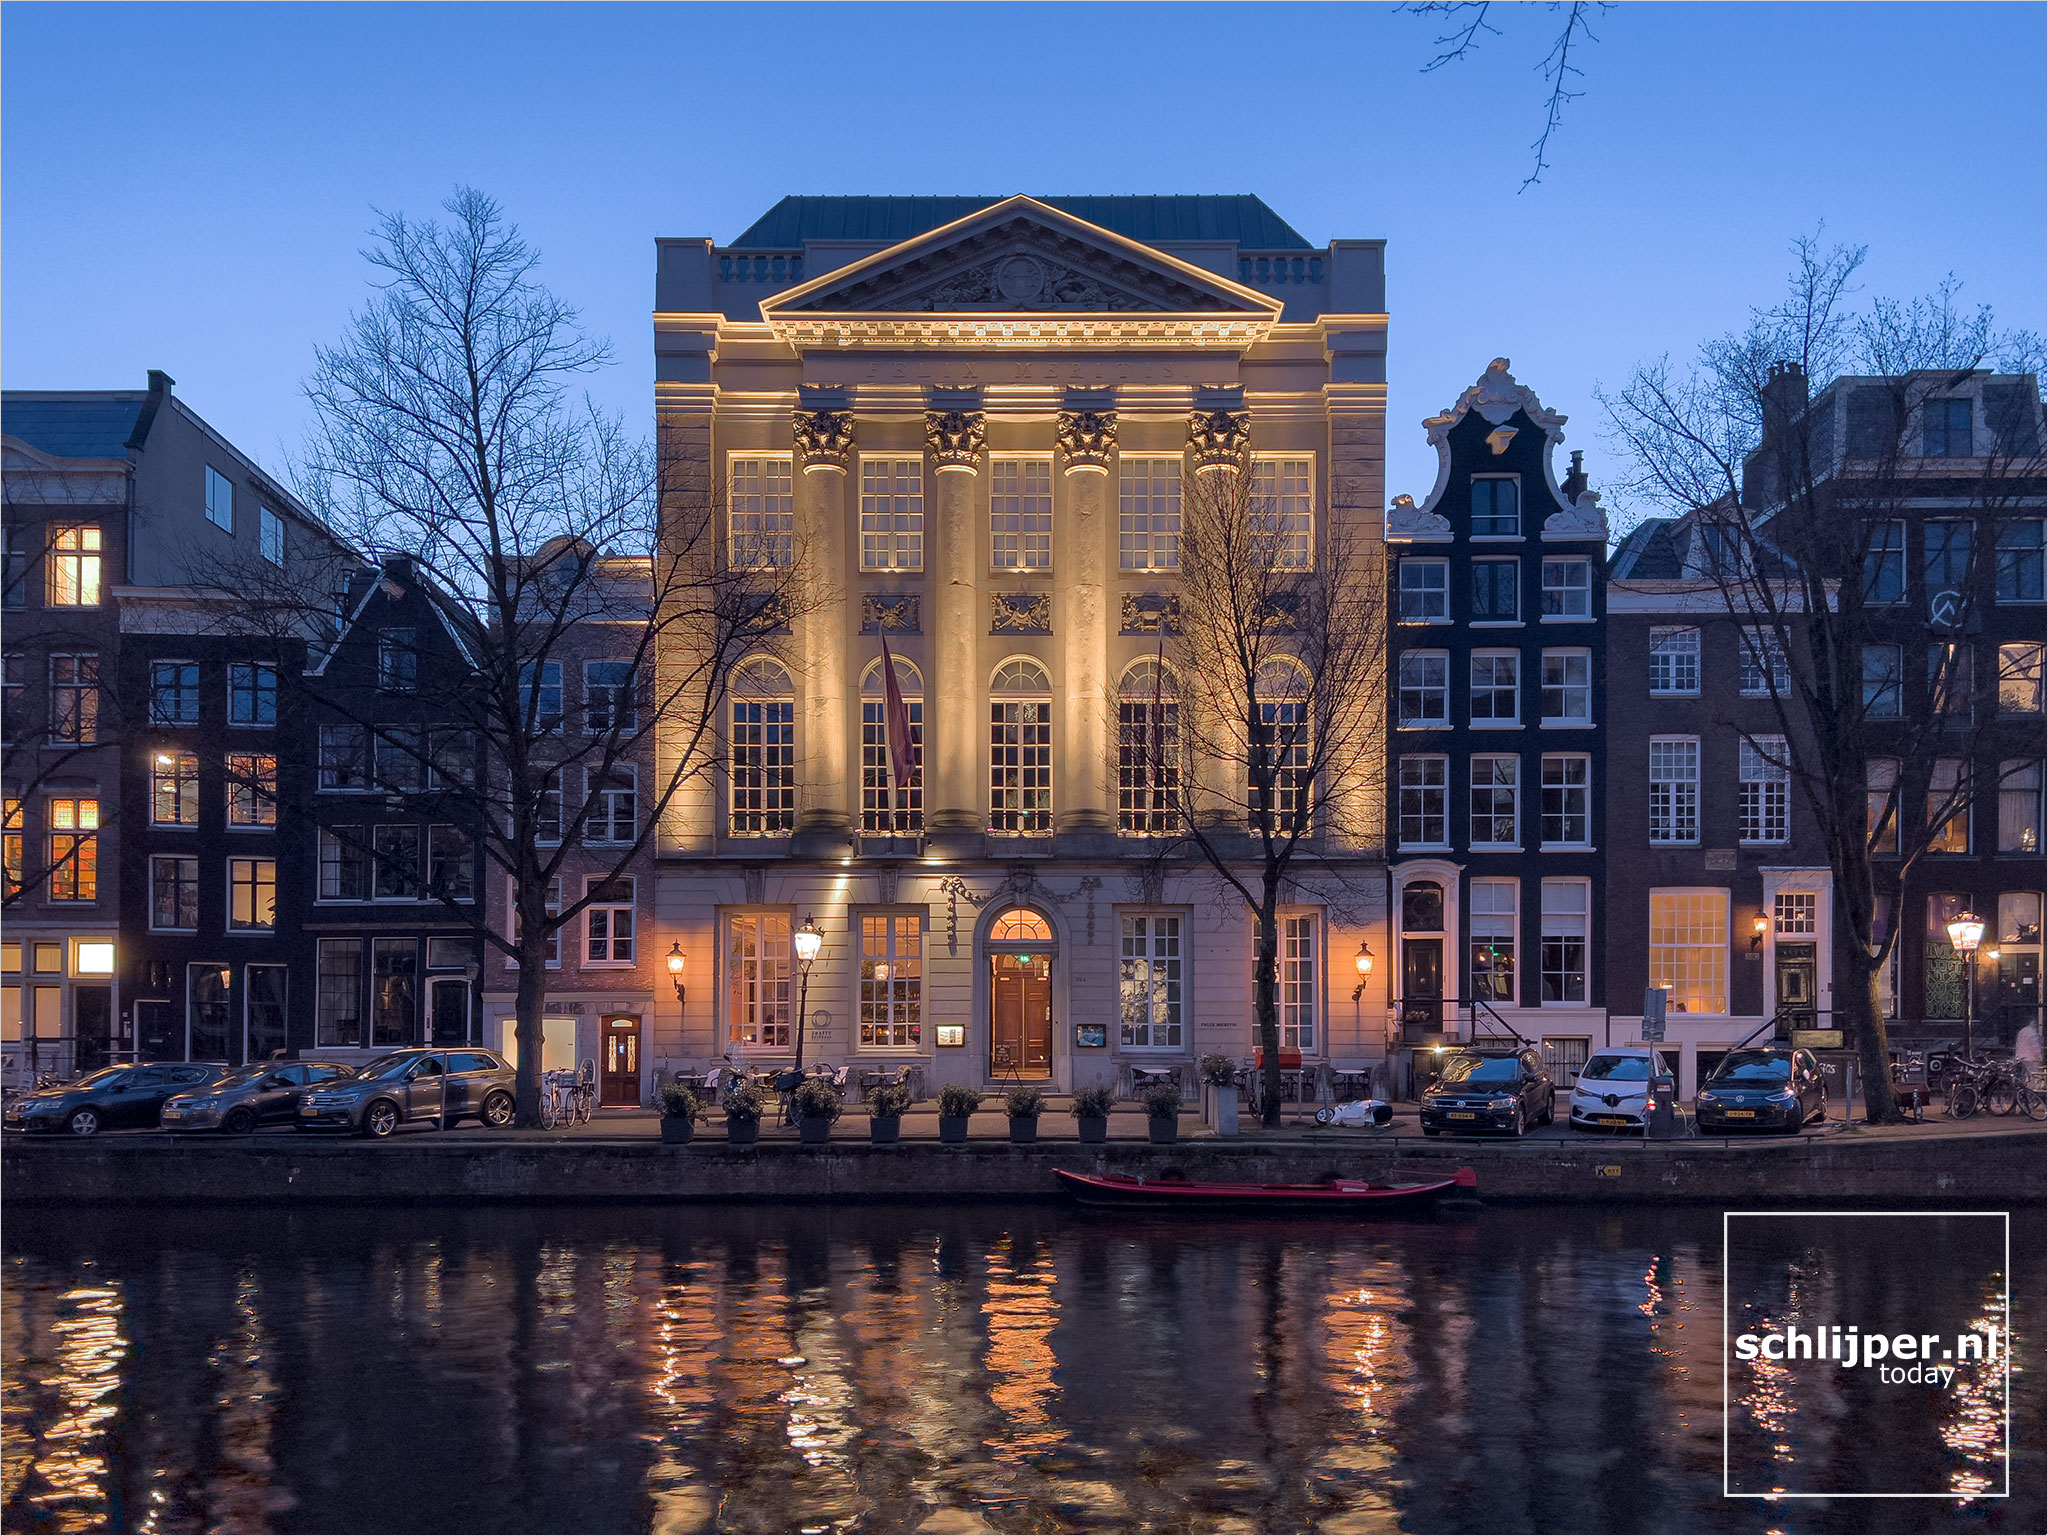 The Netherlands, Amsterdam, 9 maart 2021